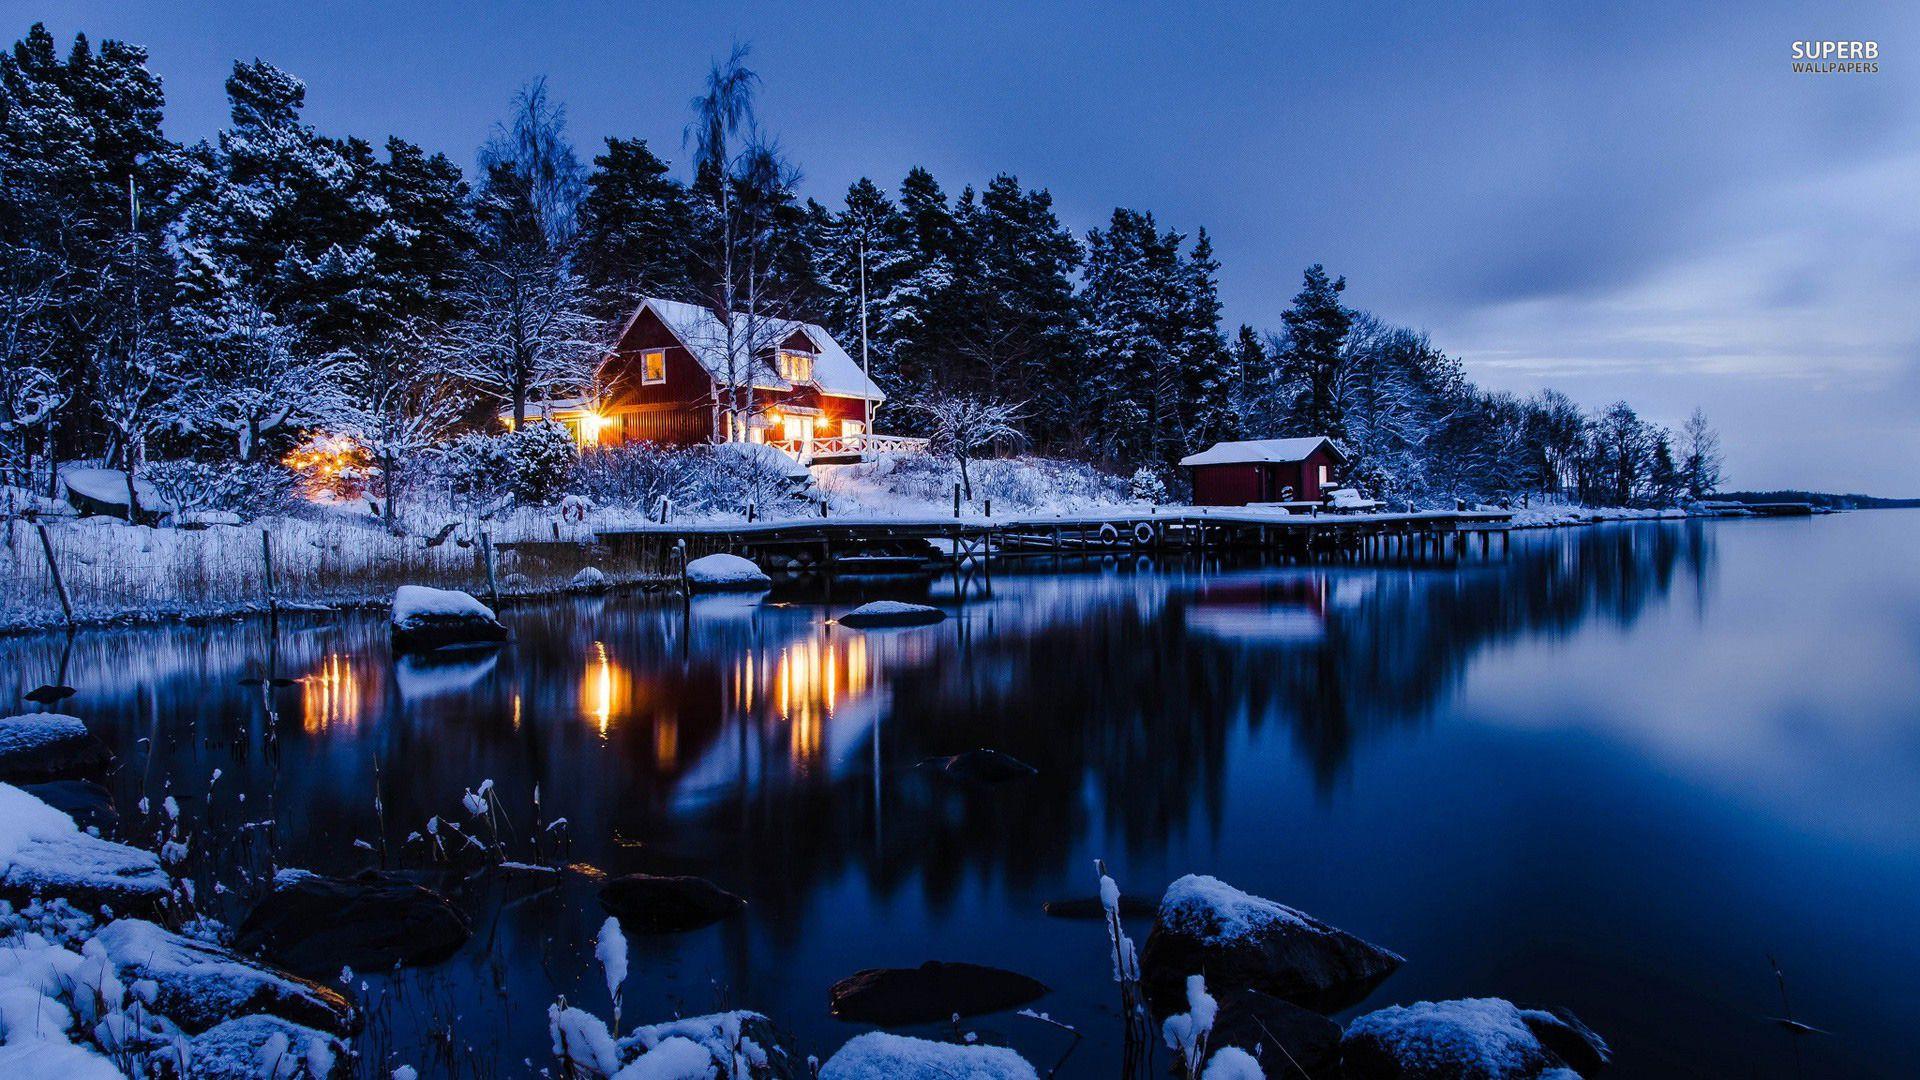 Cabins & Cottages. Winter cabin, Winter landscape, Landscape wallpaper